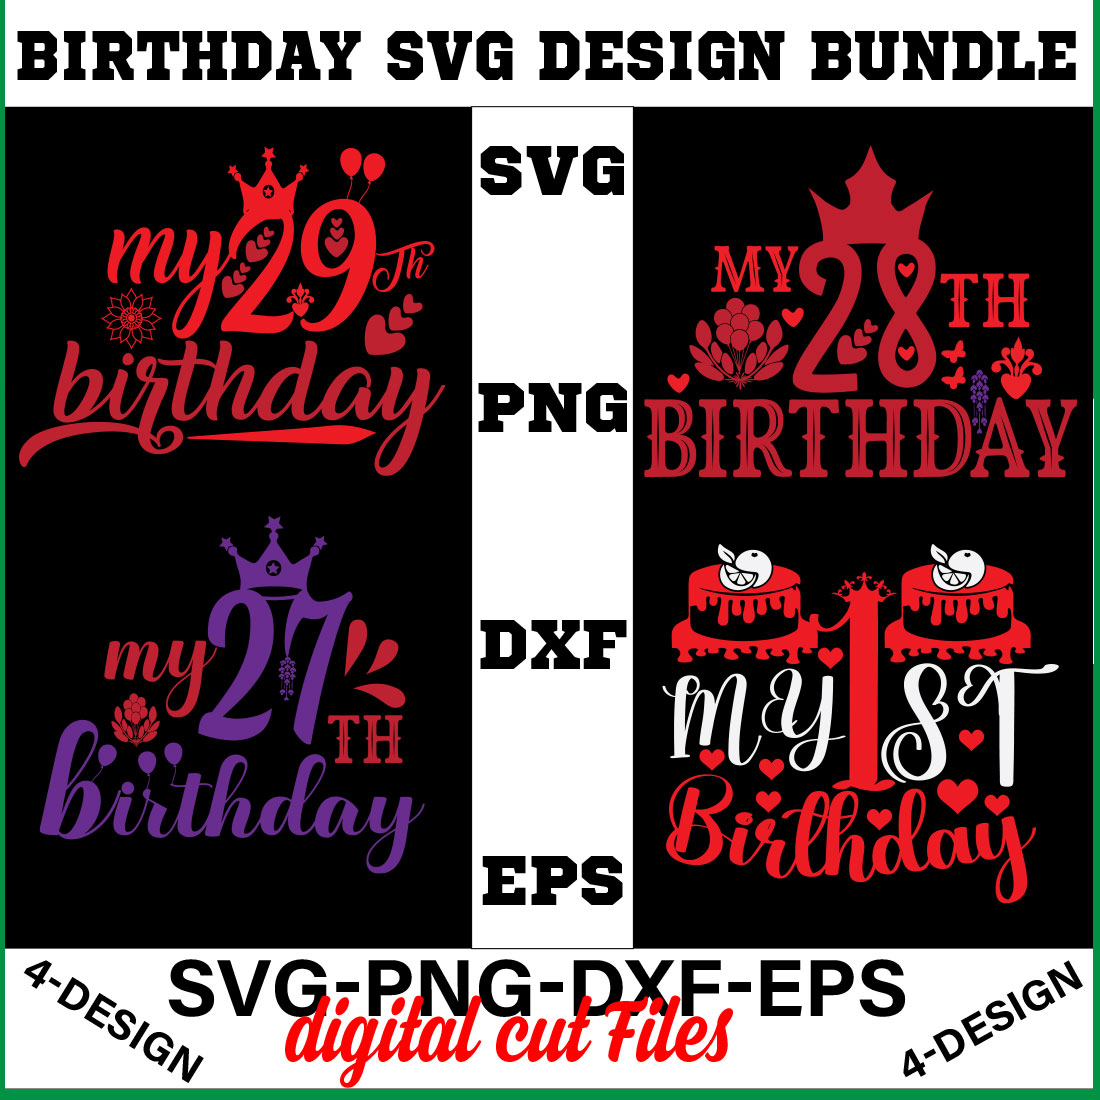 birthday svg design bundle Happy birthday svg bundle hand lettered birthday svg birthday party svg Volume-24 cover image.